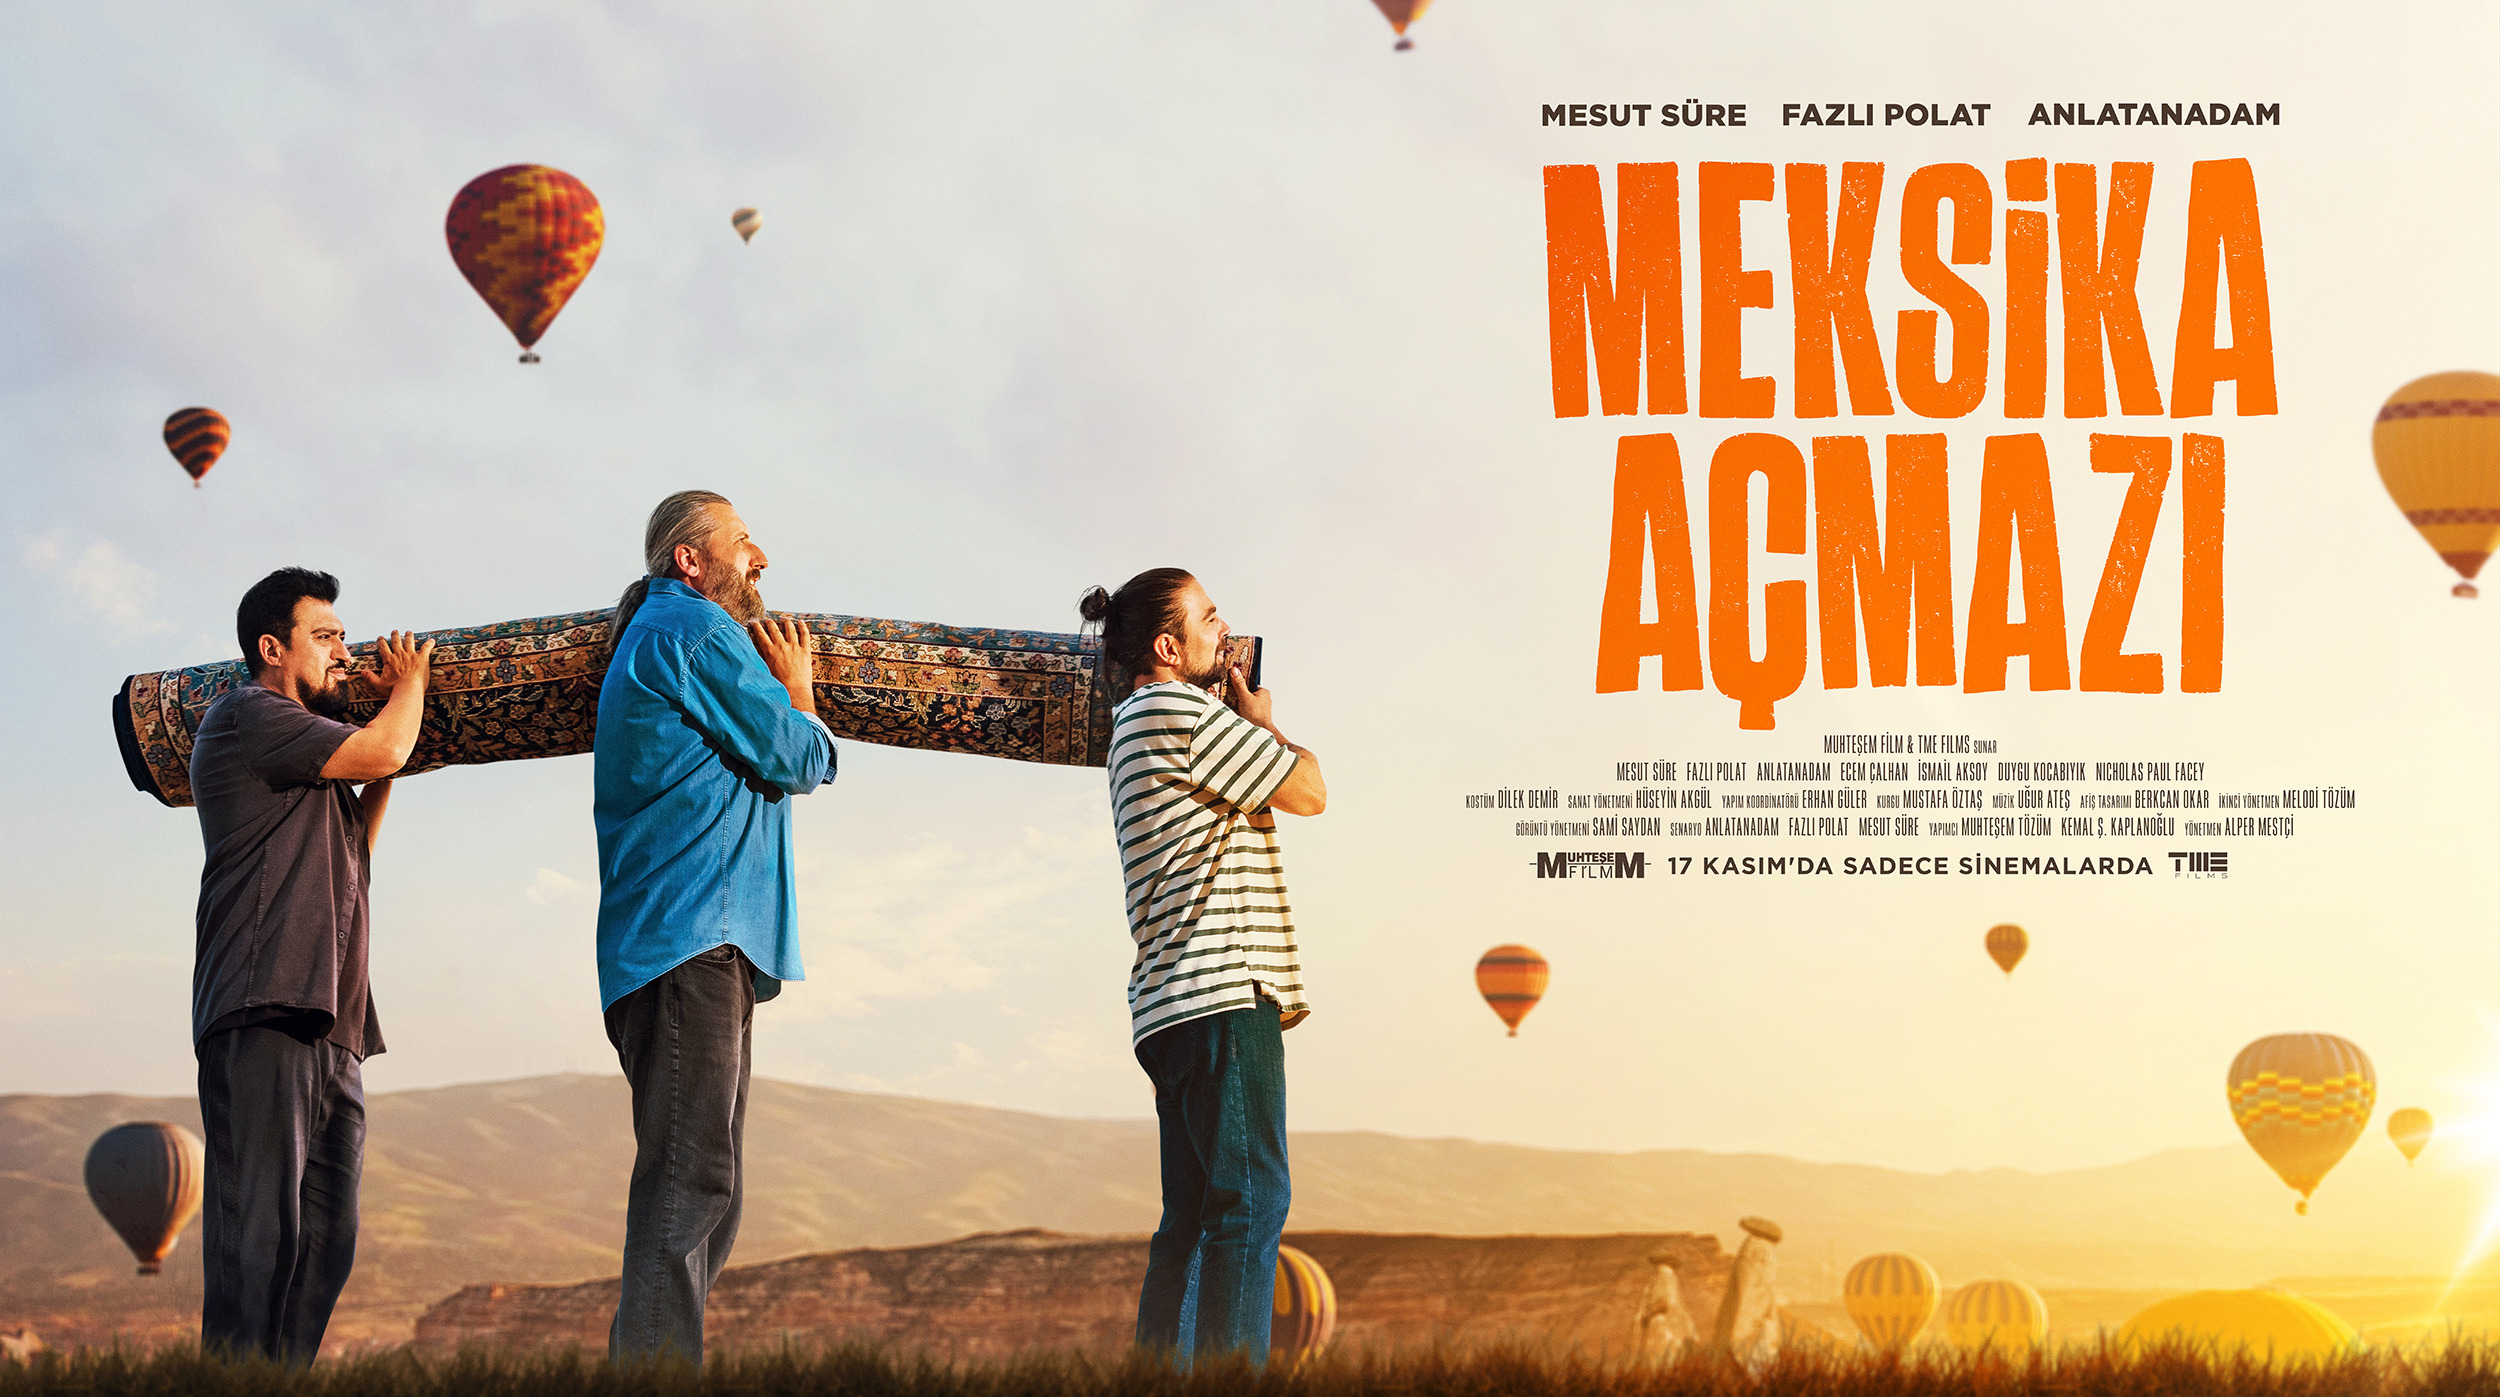 Mega Sized Movie Poster Image for Meksika Açmazi (#4 of 6)